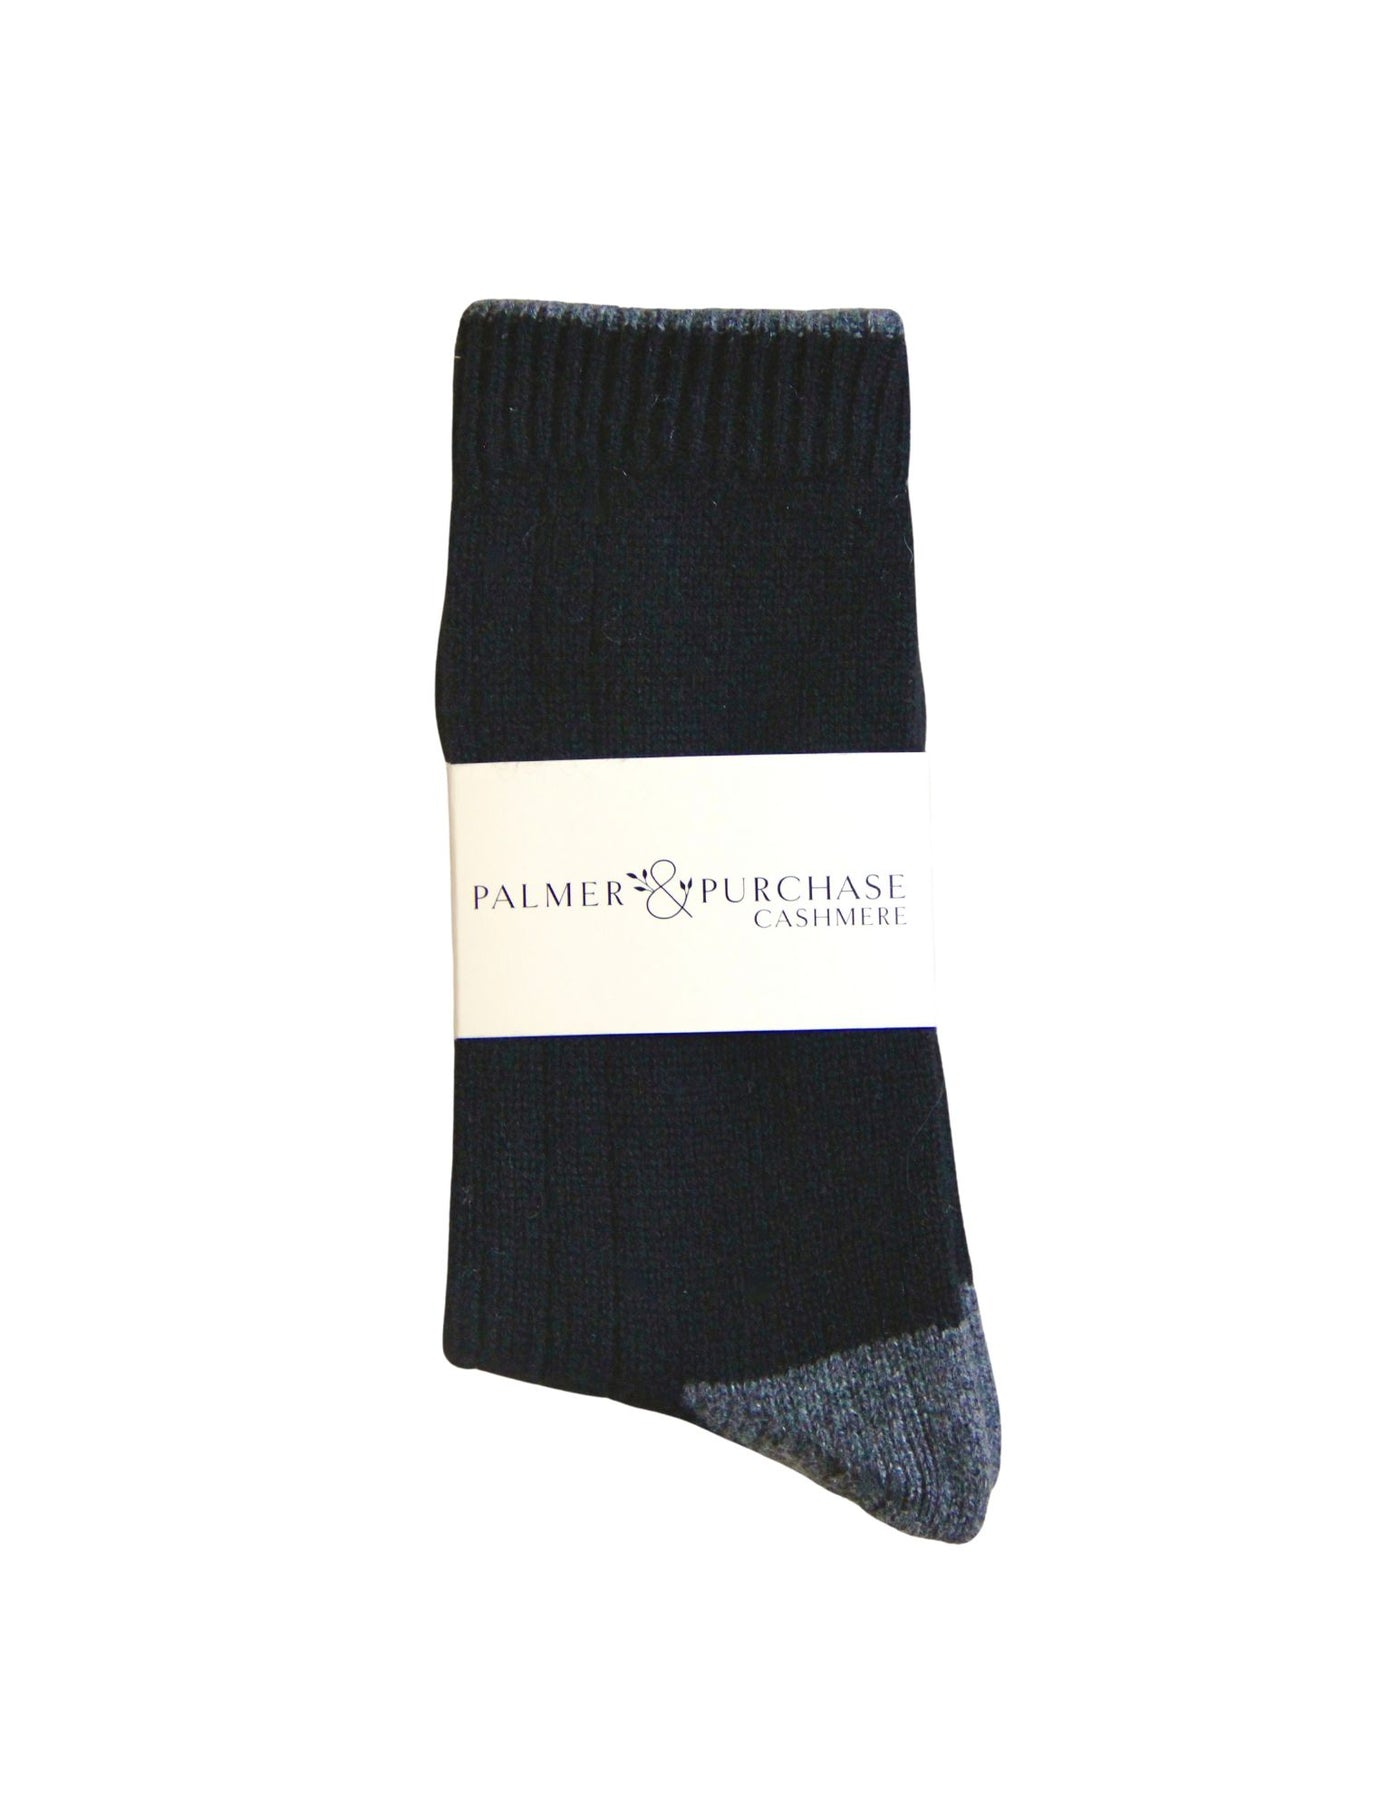 Tipped Cashmere Socks- Black